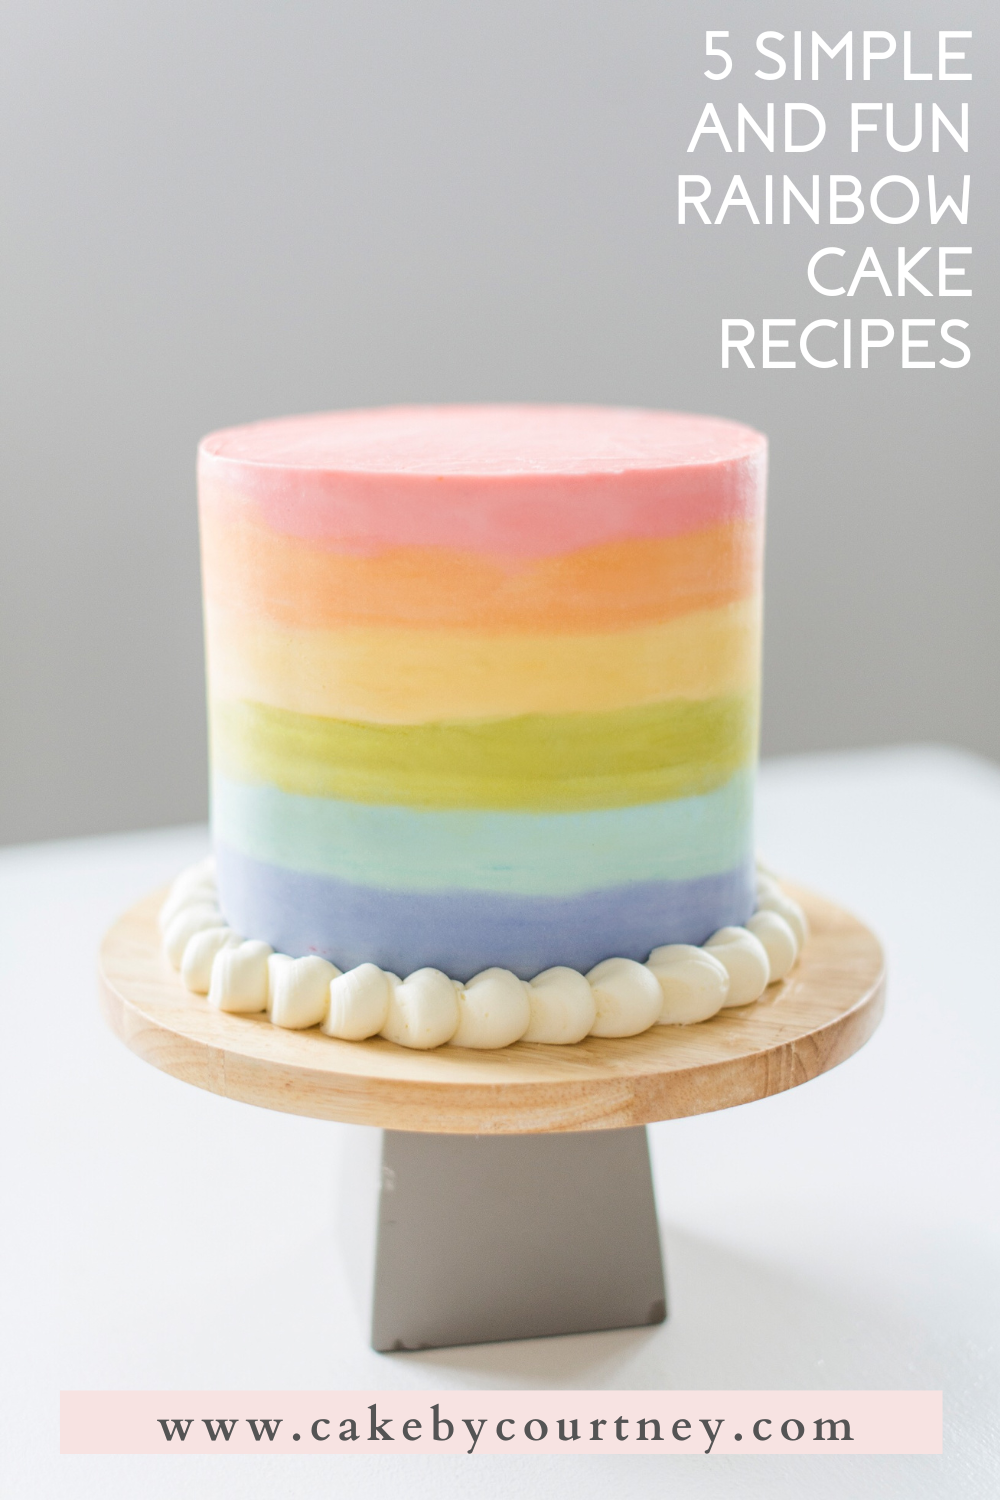 5 simple and fun rainbow cake recipes. www.cakebycourtney.com